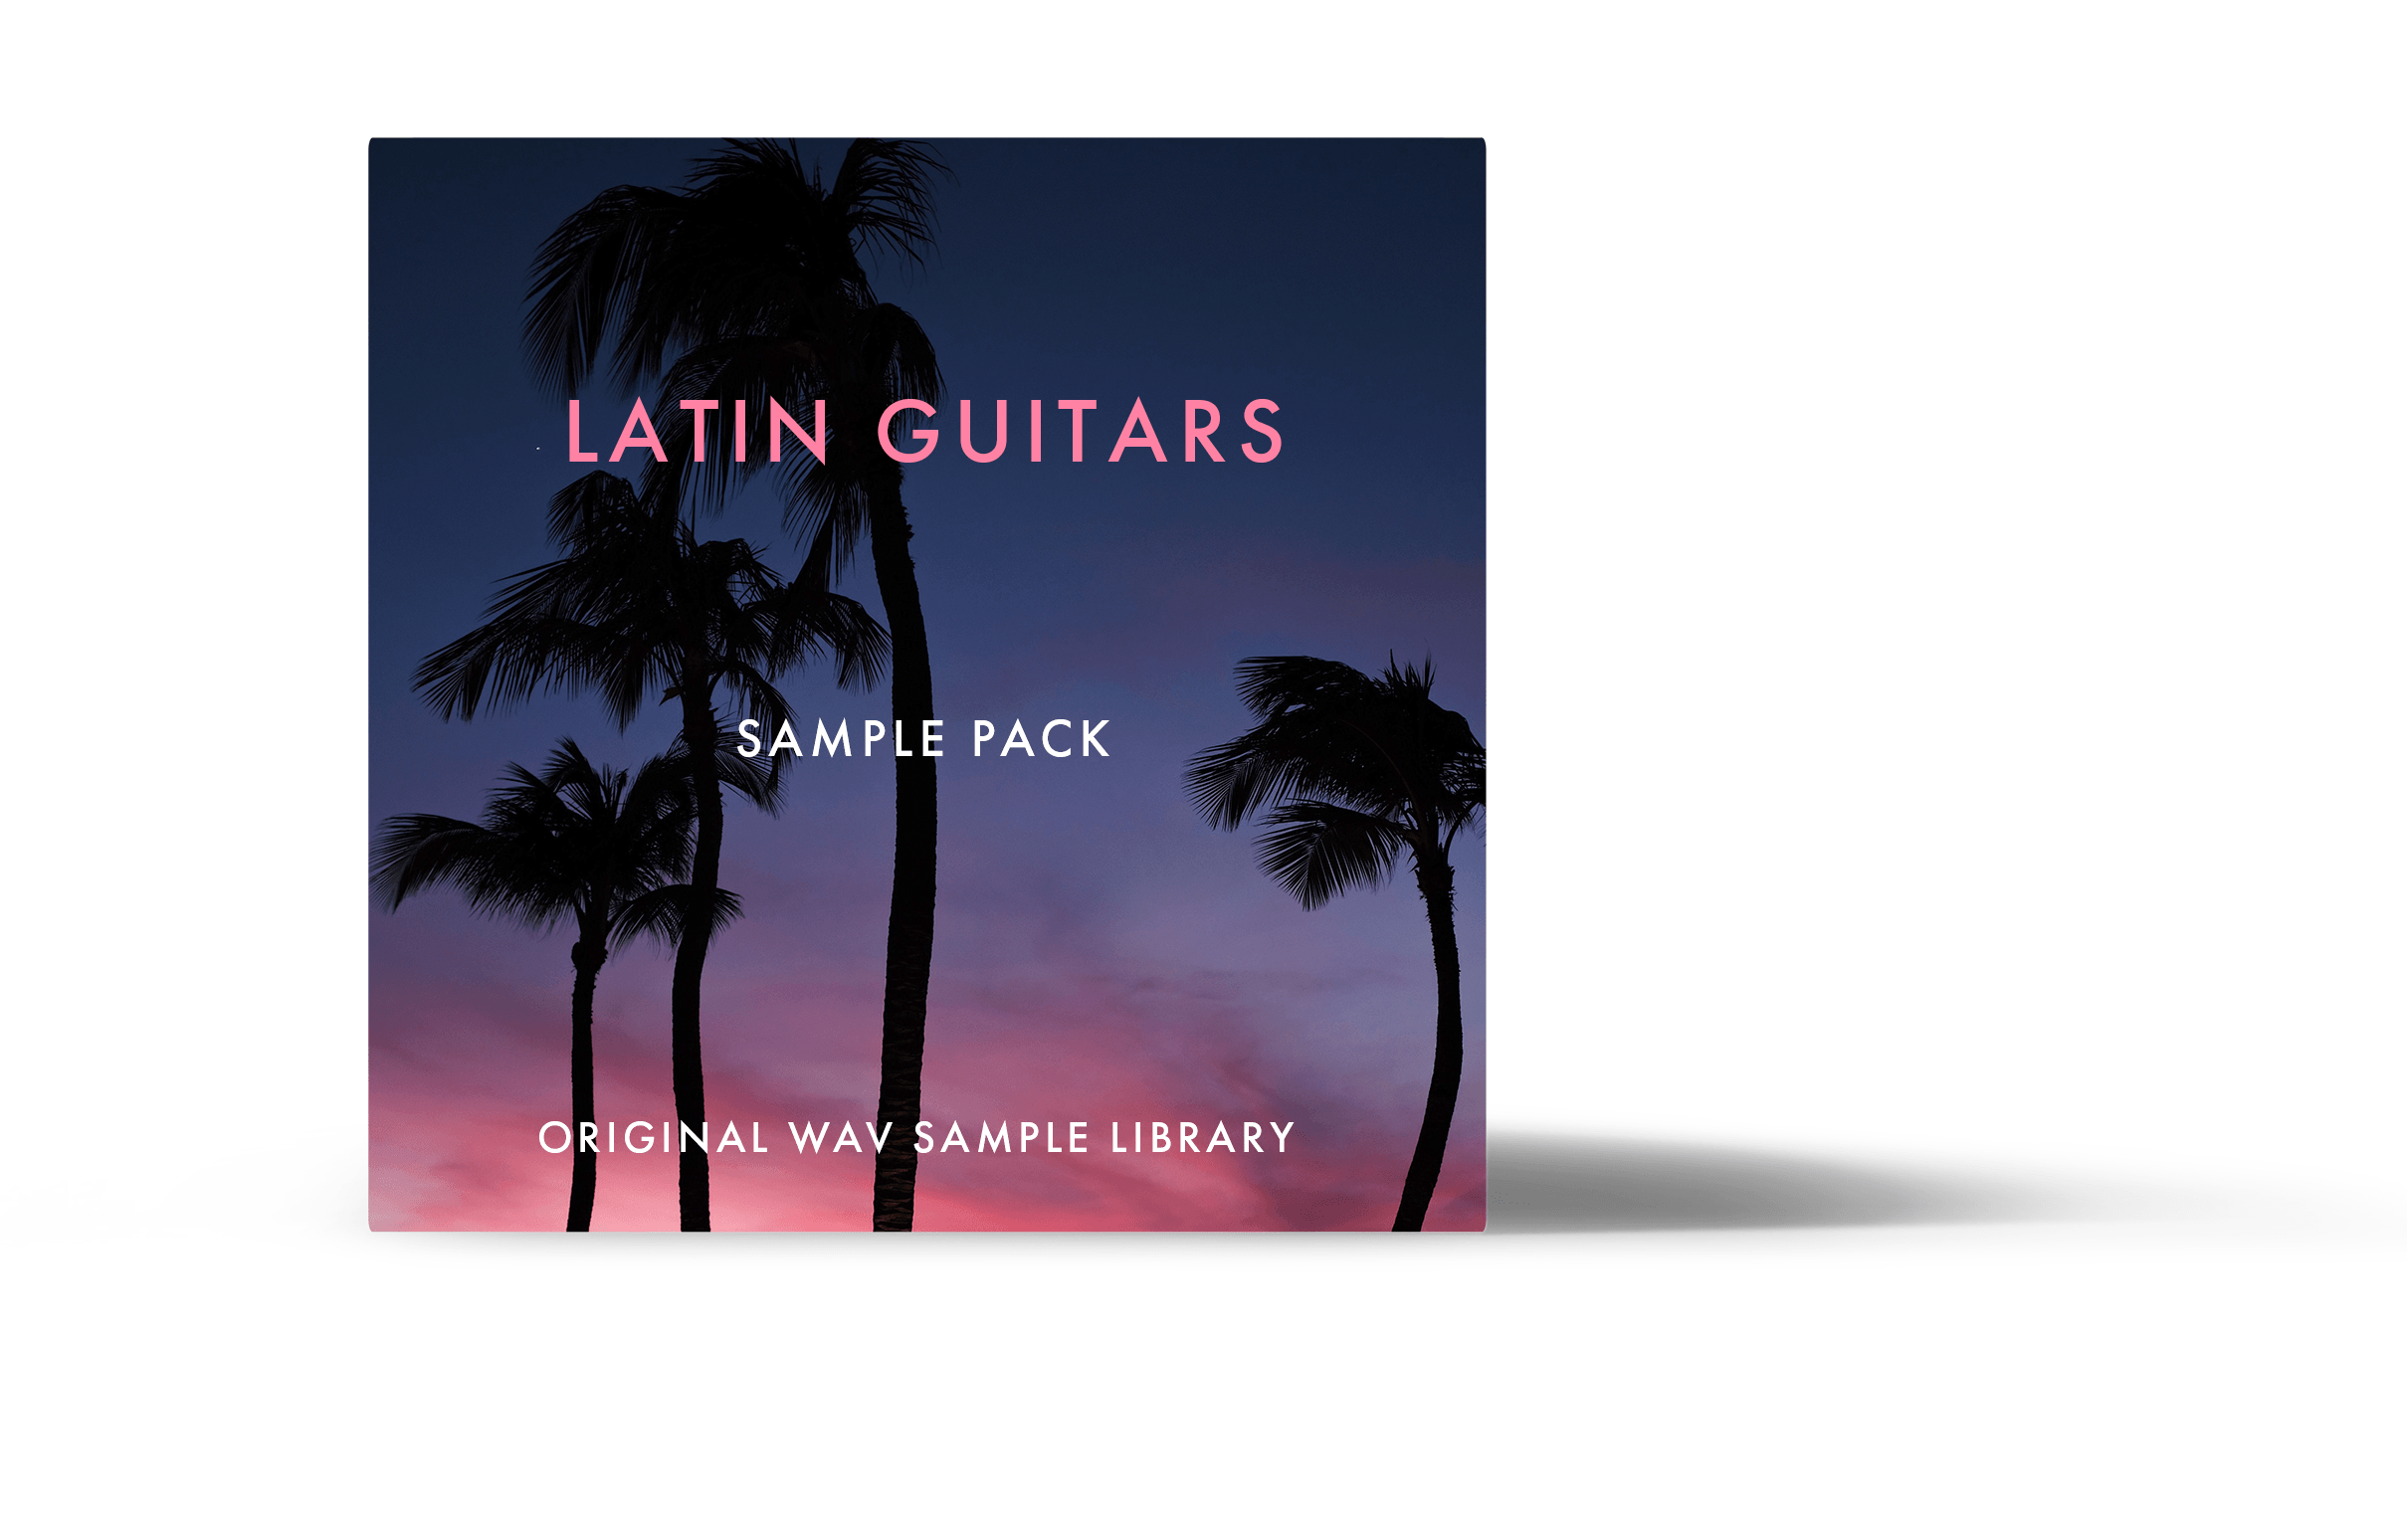 Latin Sample Pack